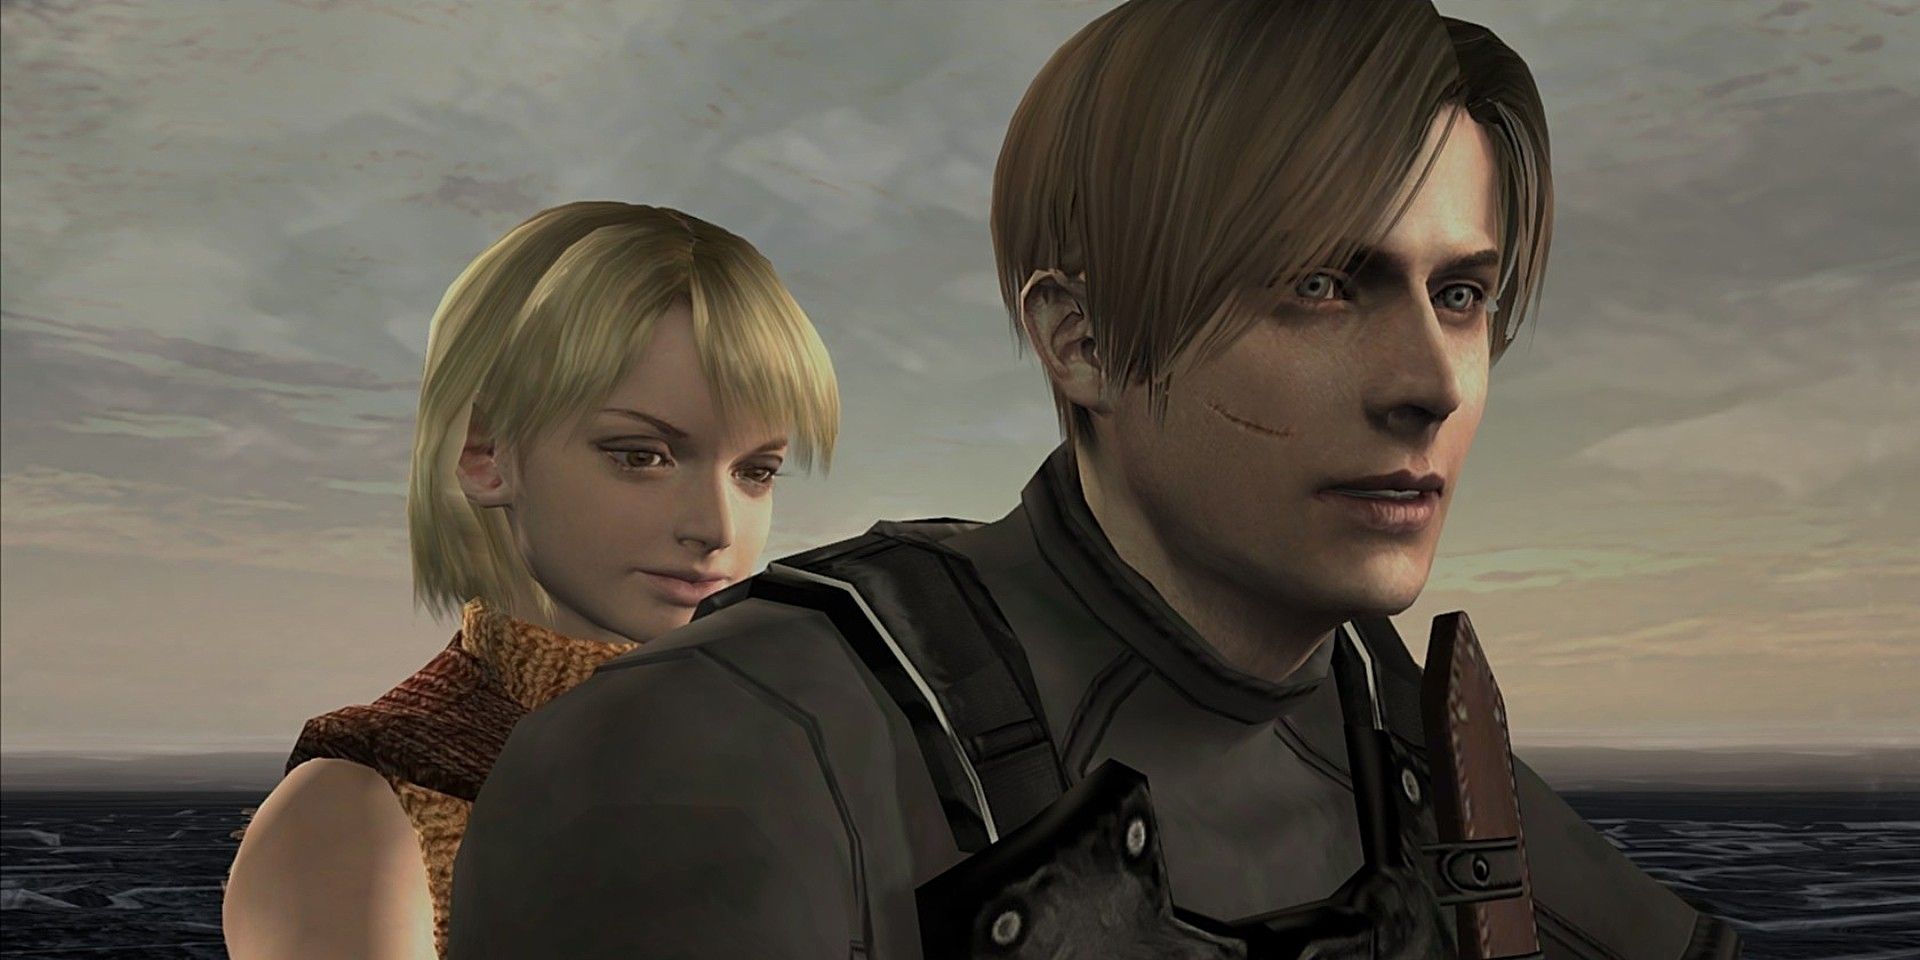 Resident Evil 4 Remake Review - Ashley Graham's Day Off